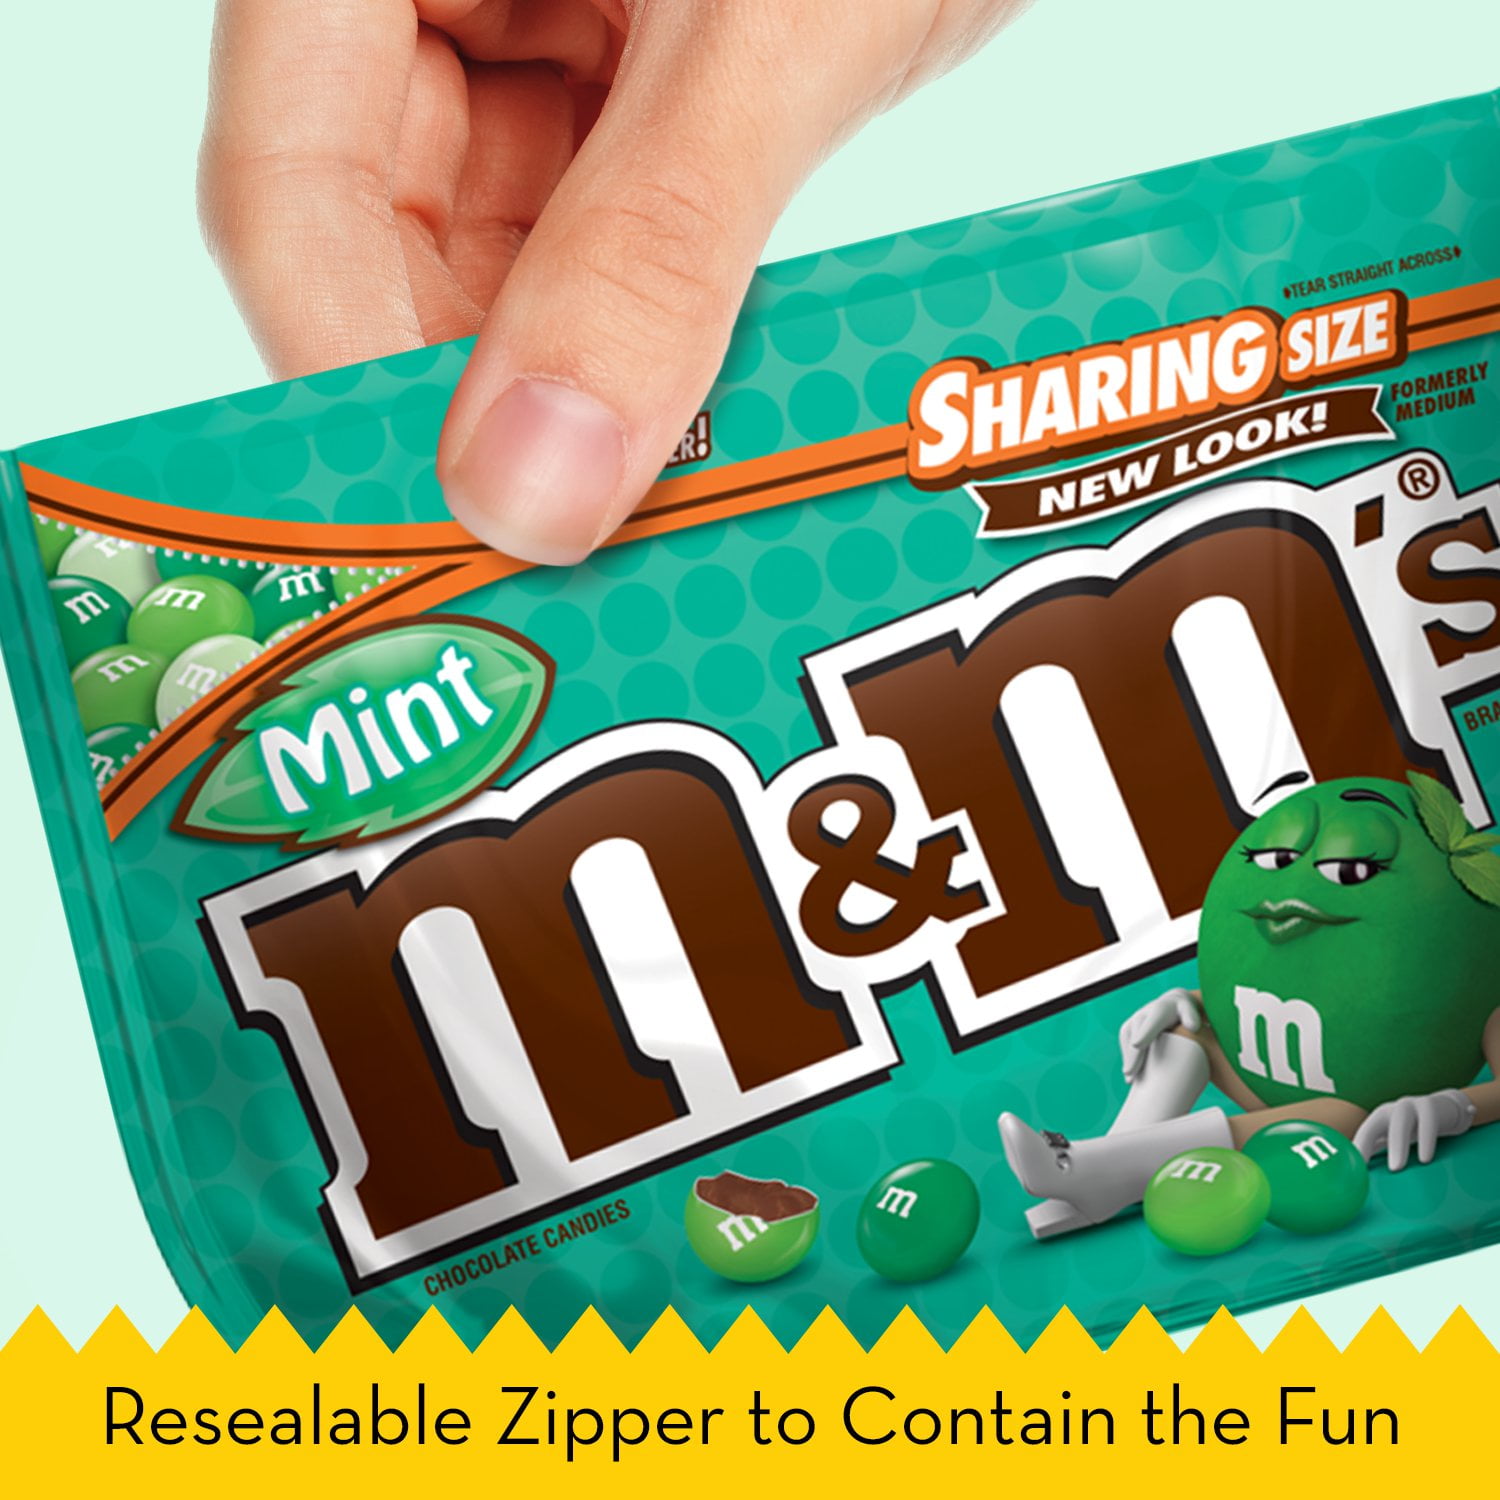 M&M'S Dark Chocolate Mint Candy, Sharing Size, 9.6 oz Bag, Chocolate